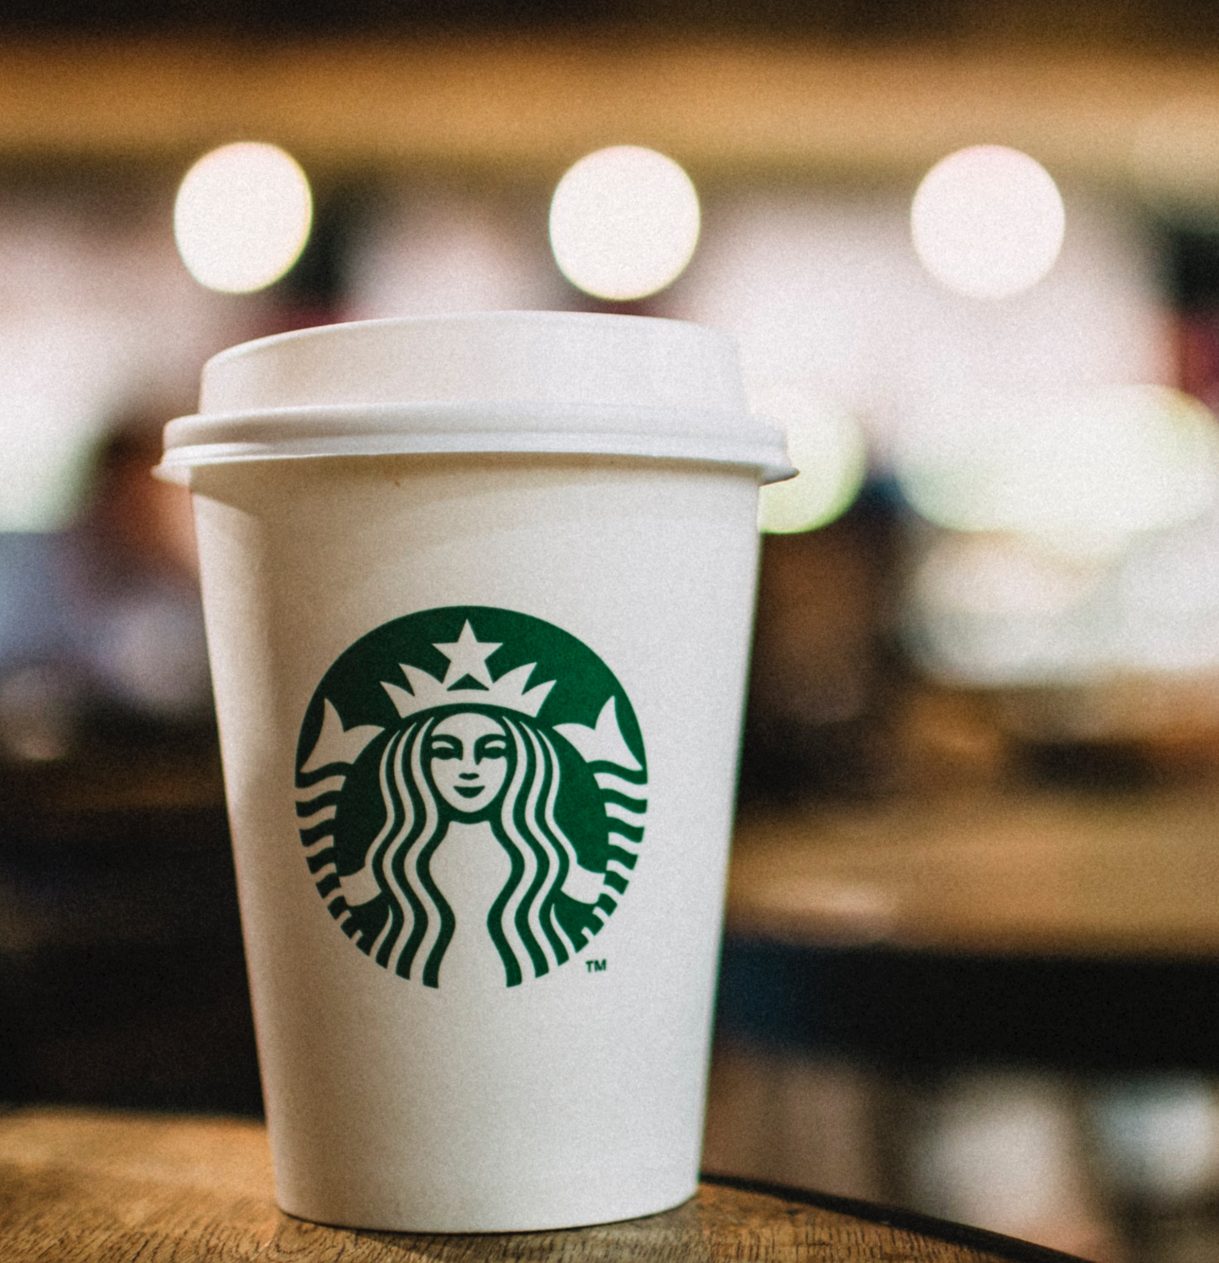 Starbucks Best Buy TripAdvisor Worker Caregivers